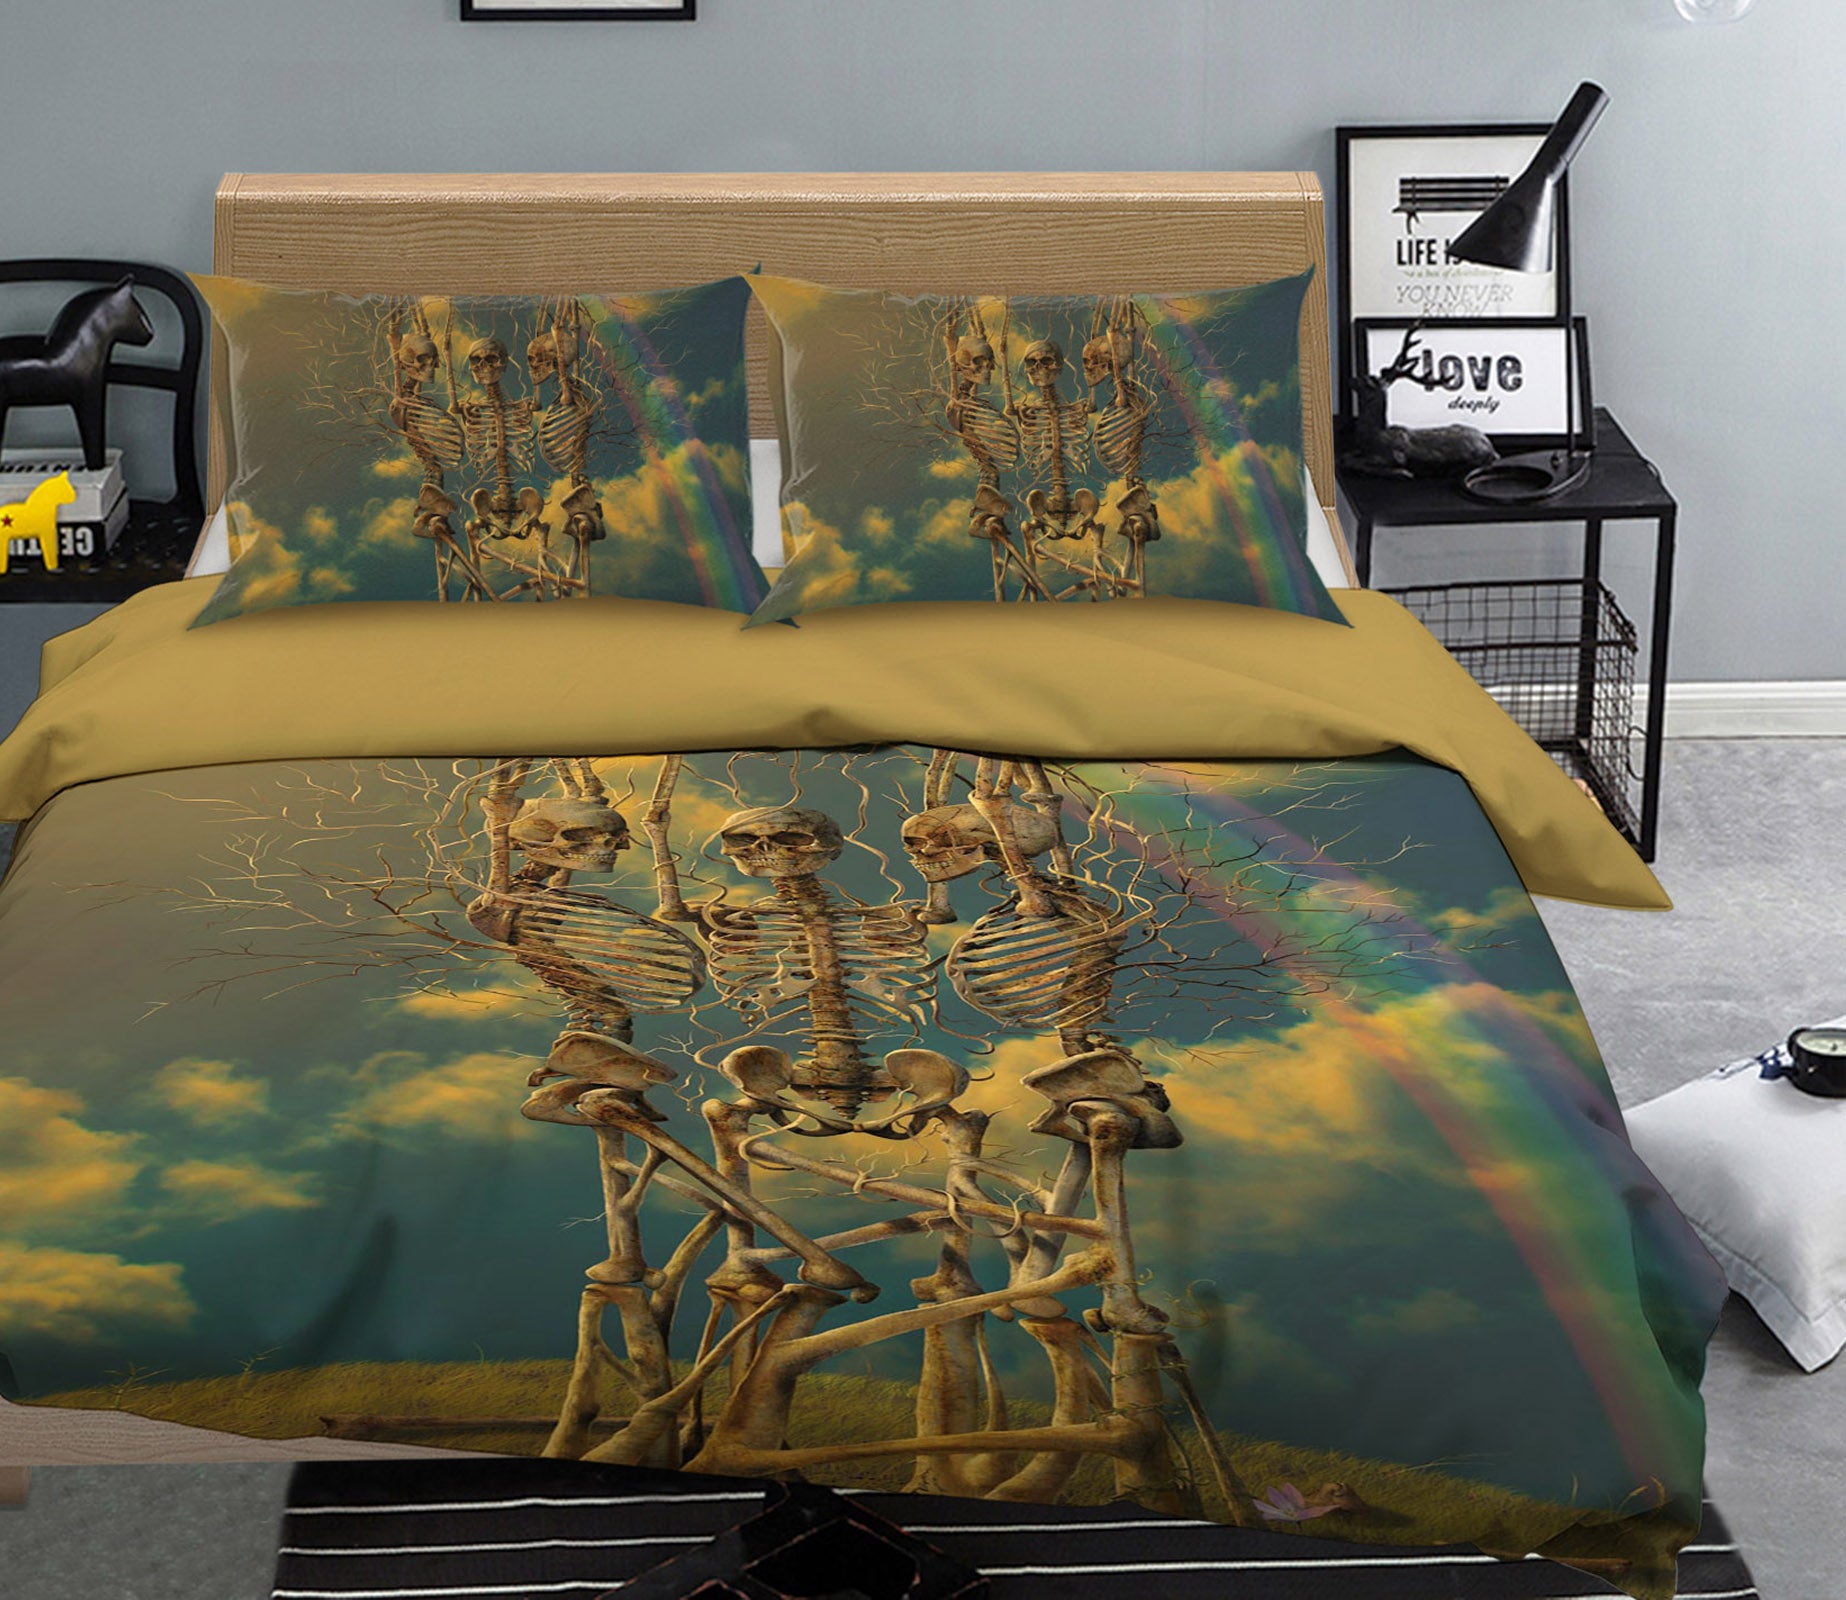 3D Life Cycle 056 Bed Pillowcases Quilt Exclusive Designer Vincent